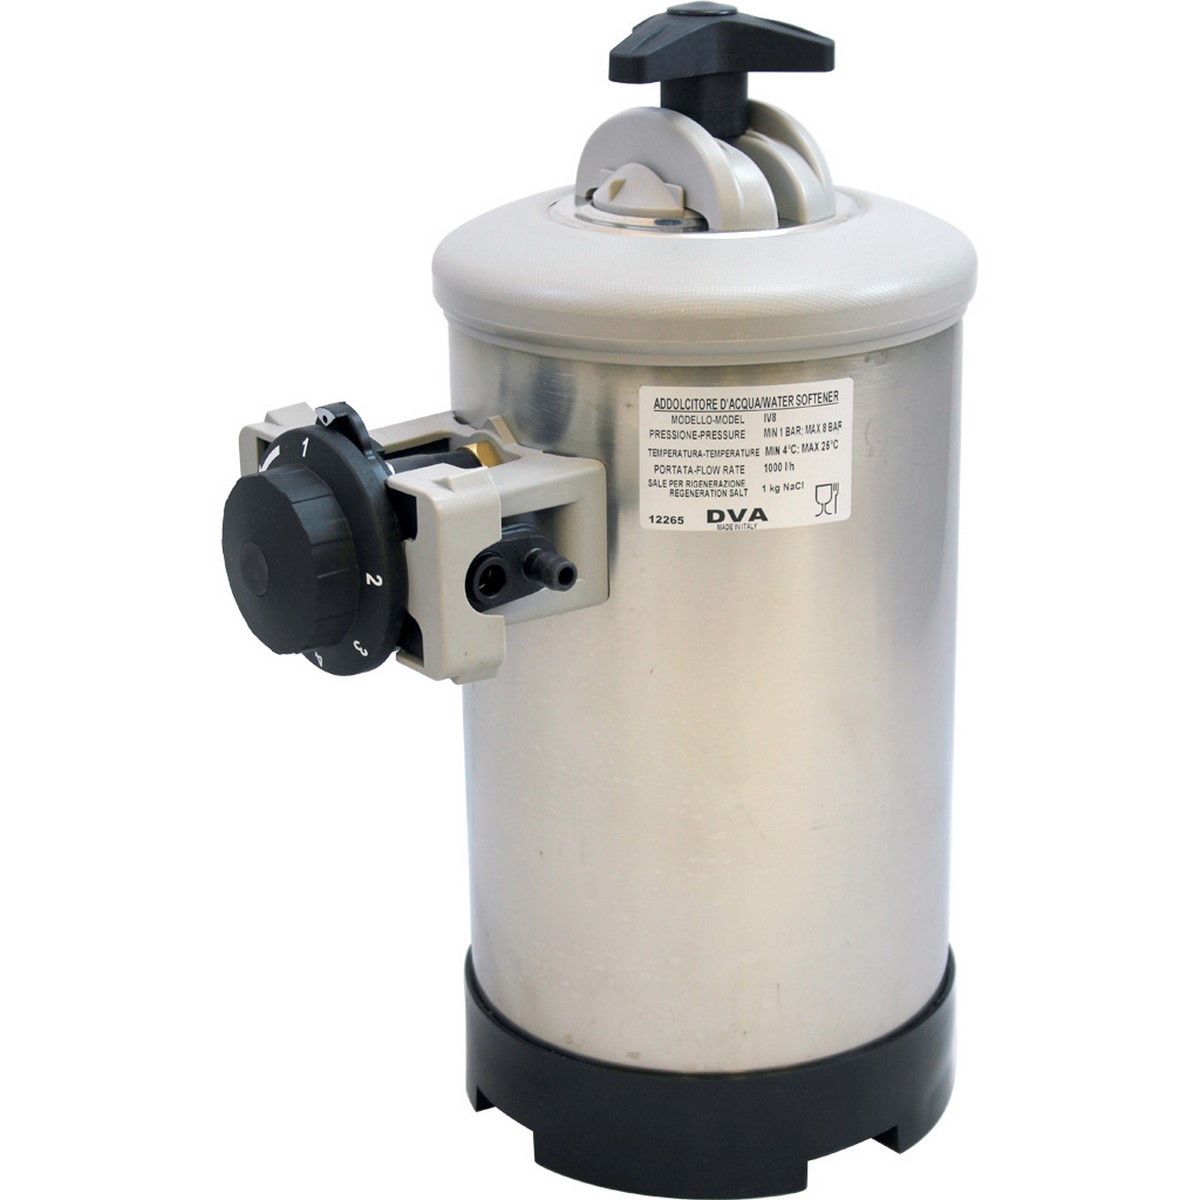 Acquista online Manual water softener DVA - IV Series- IV16